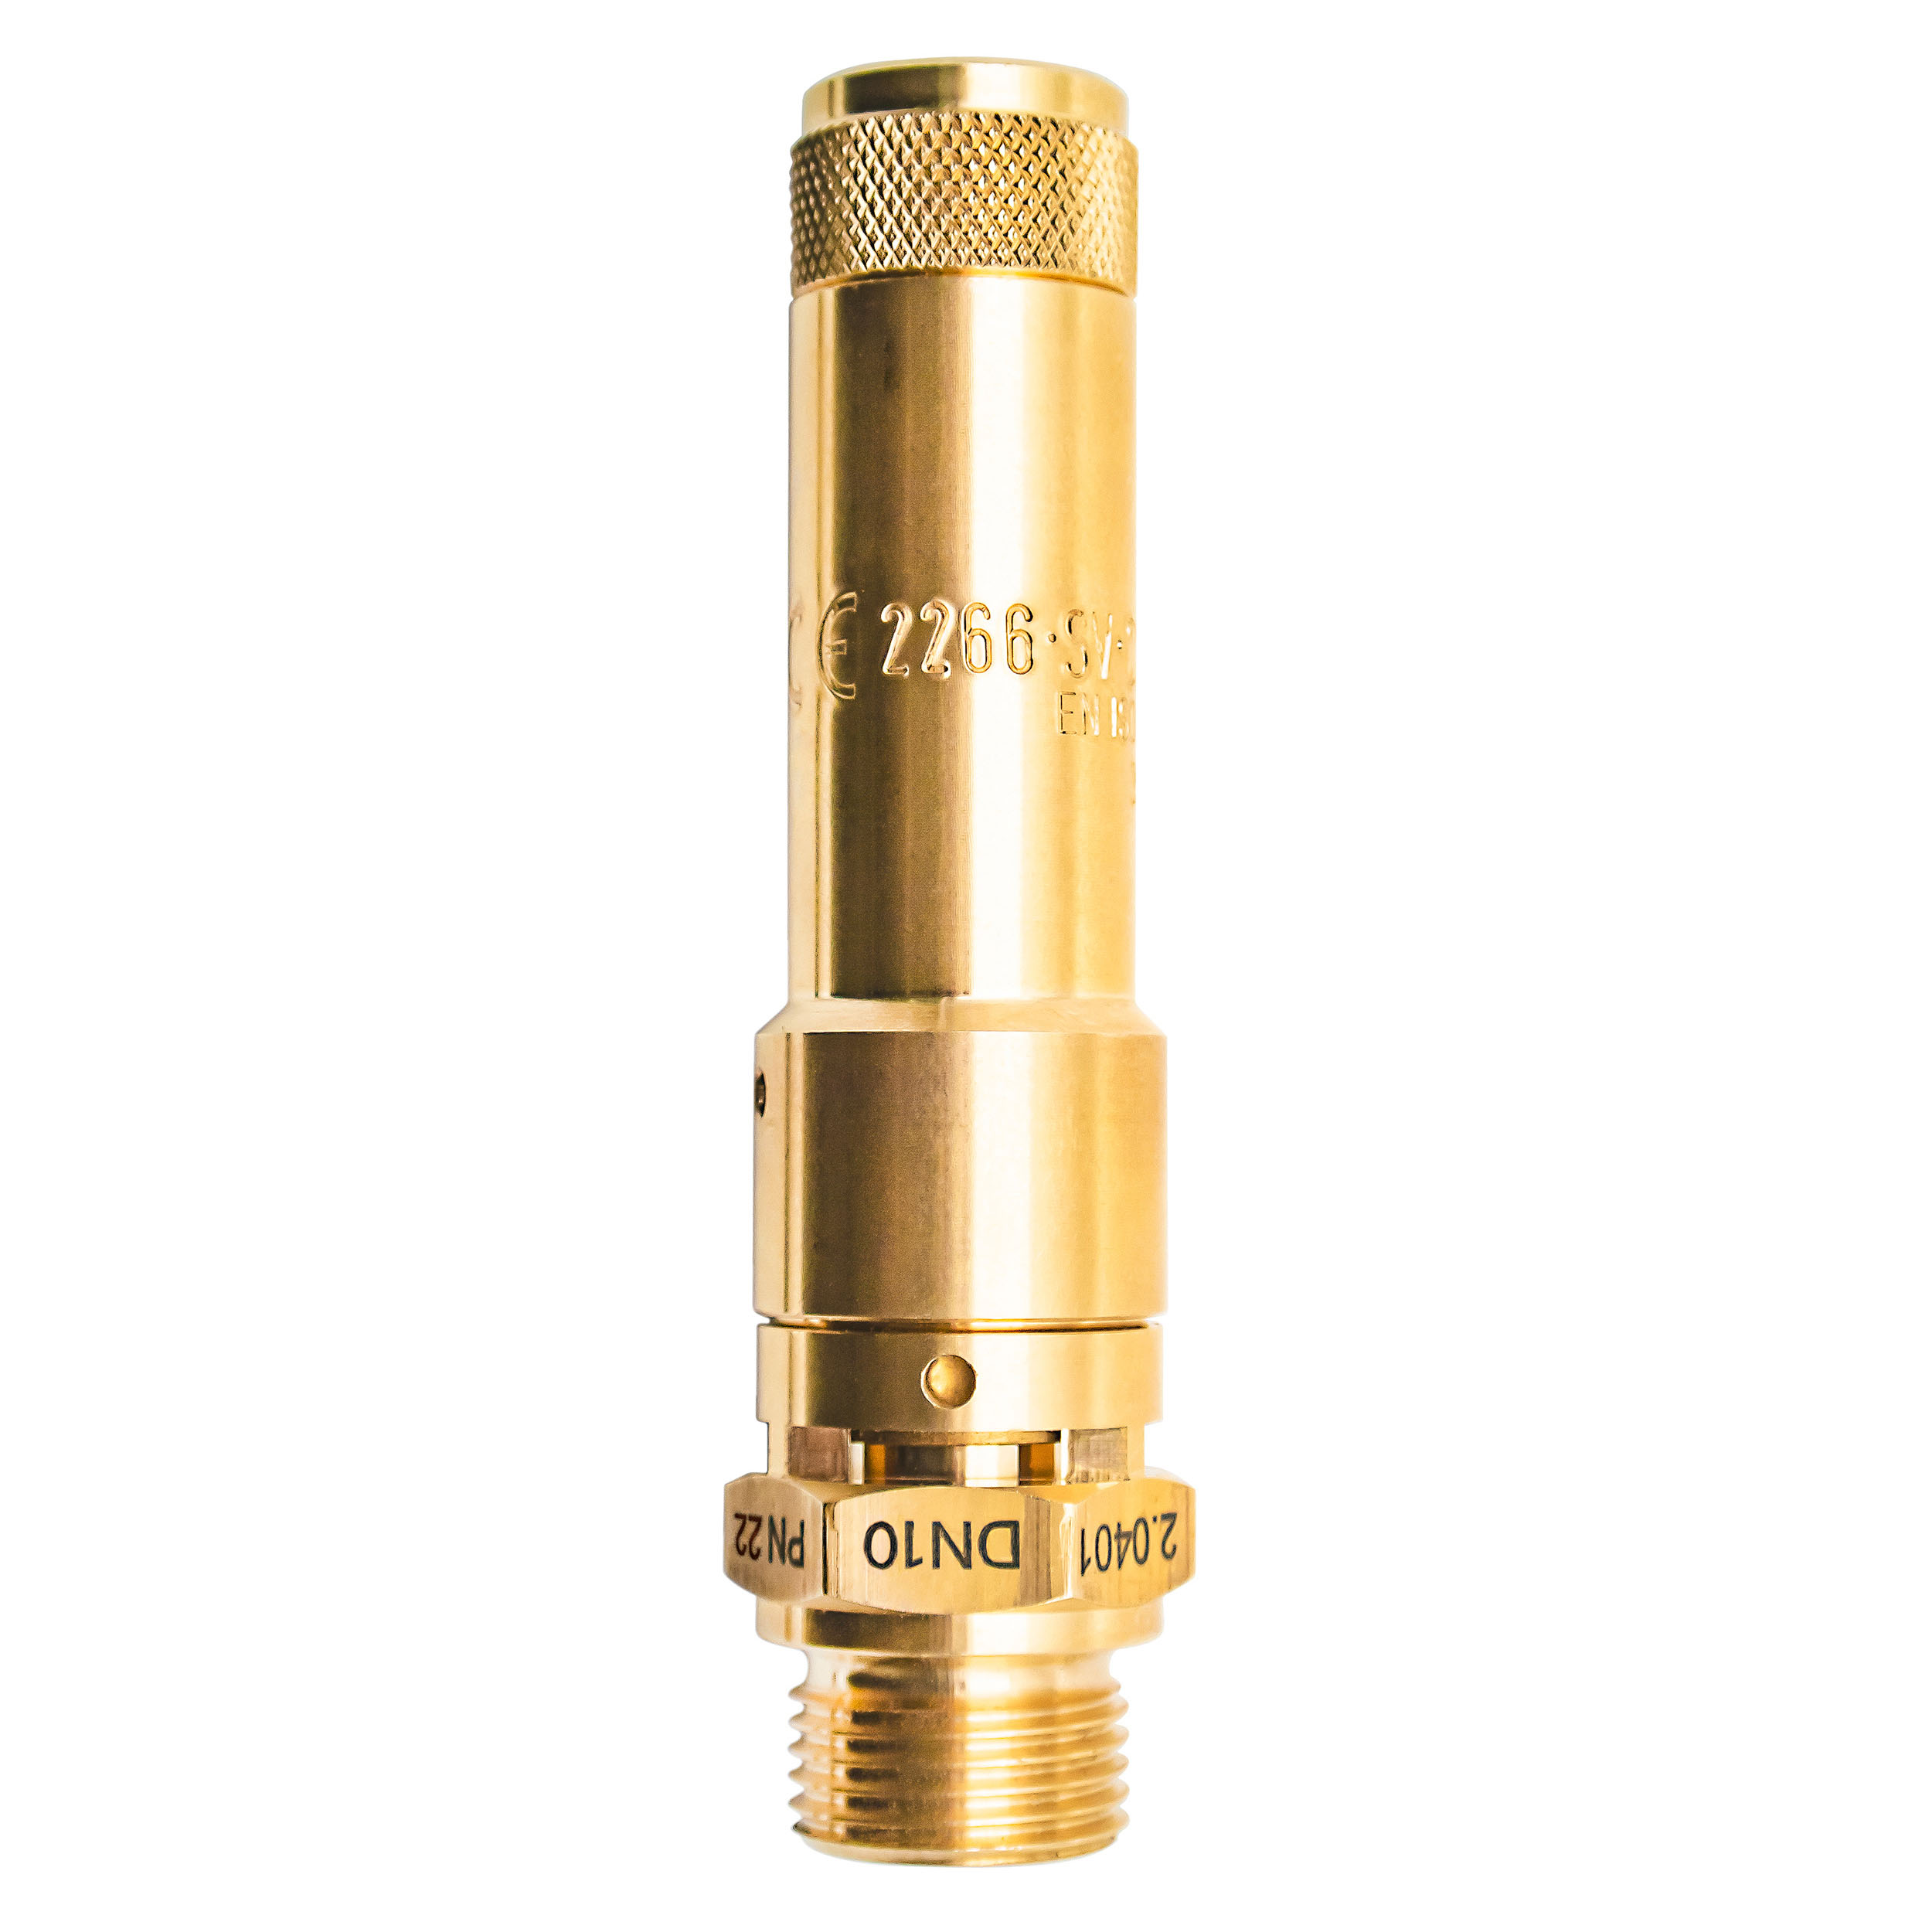 Component-tested safety valve DN 10, G½, pressure: 11.6-16 bar